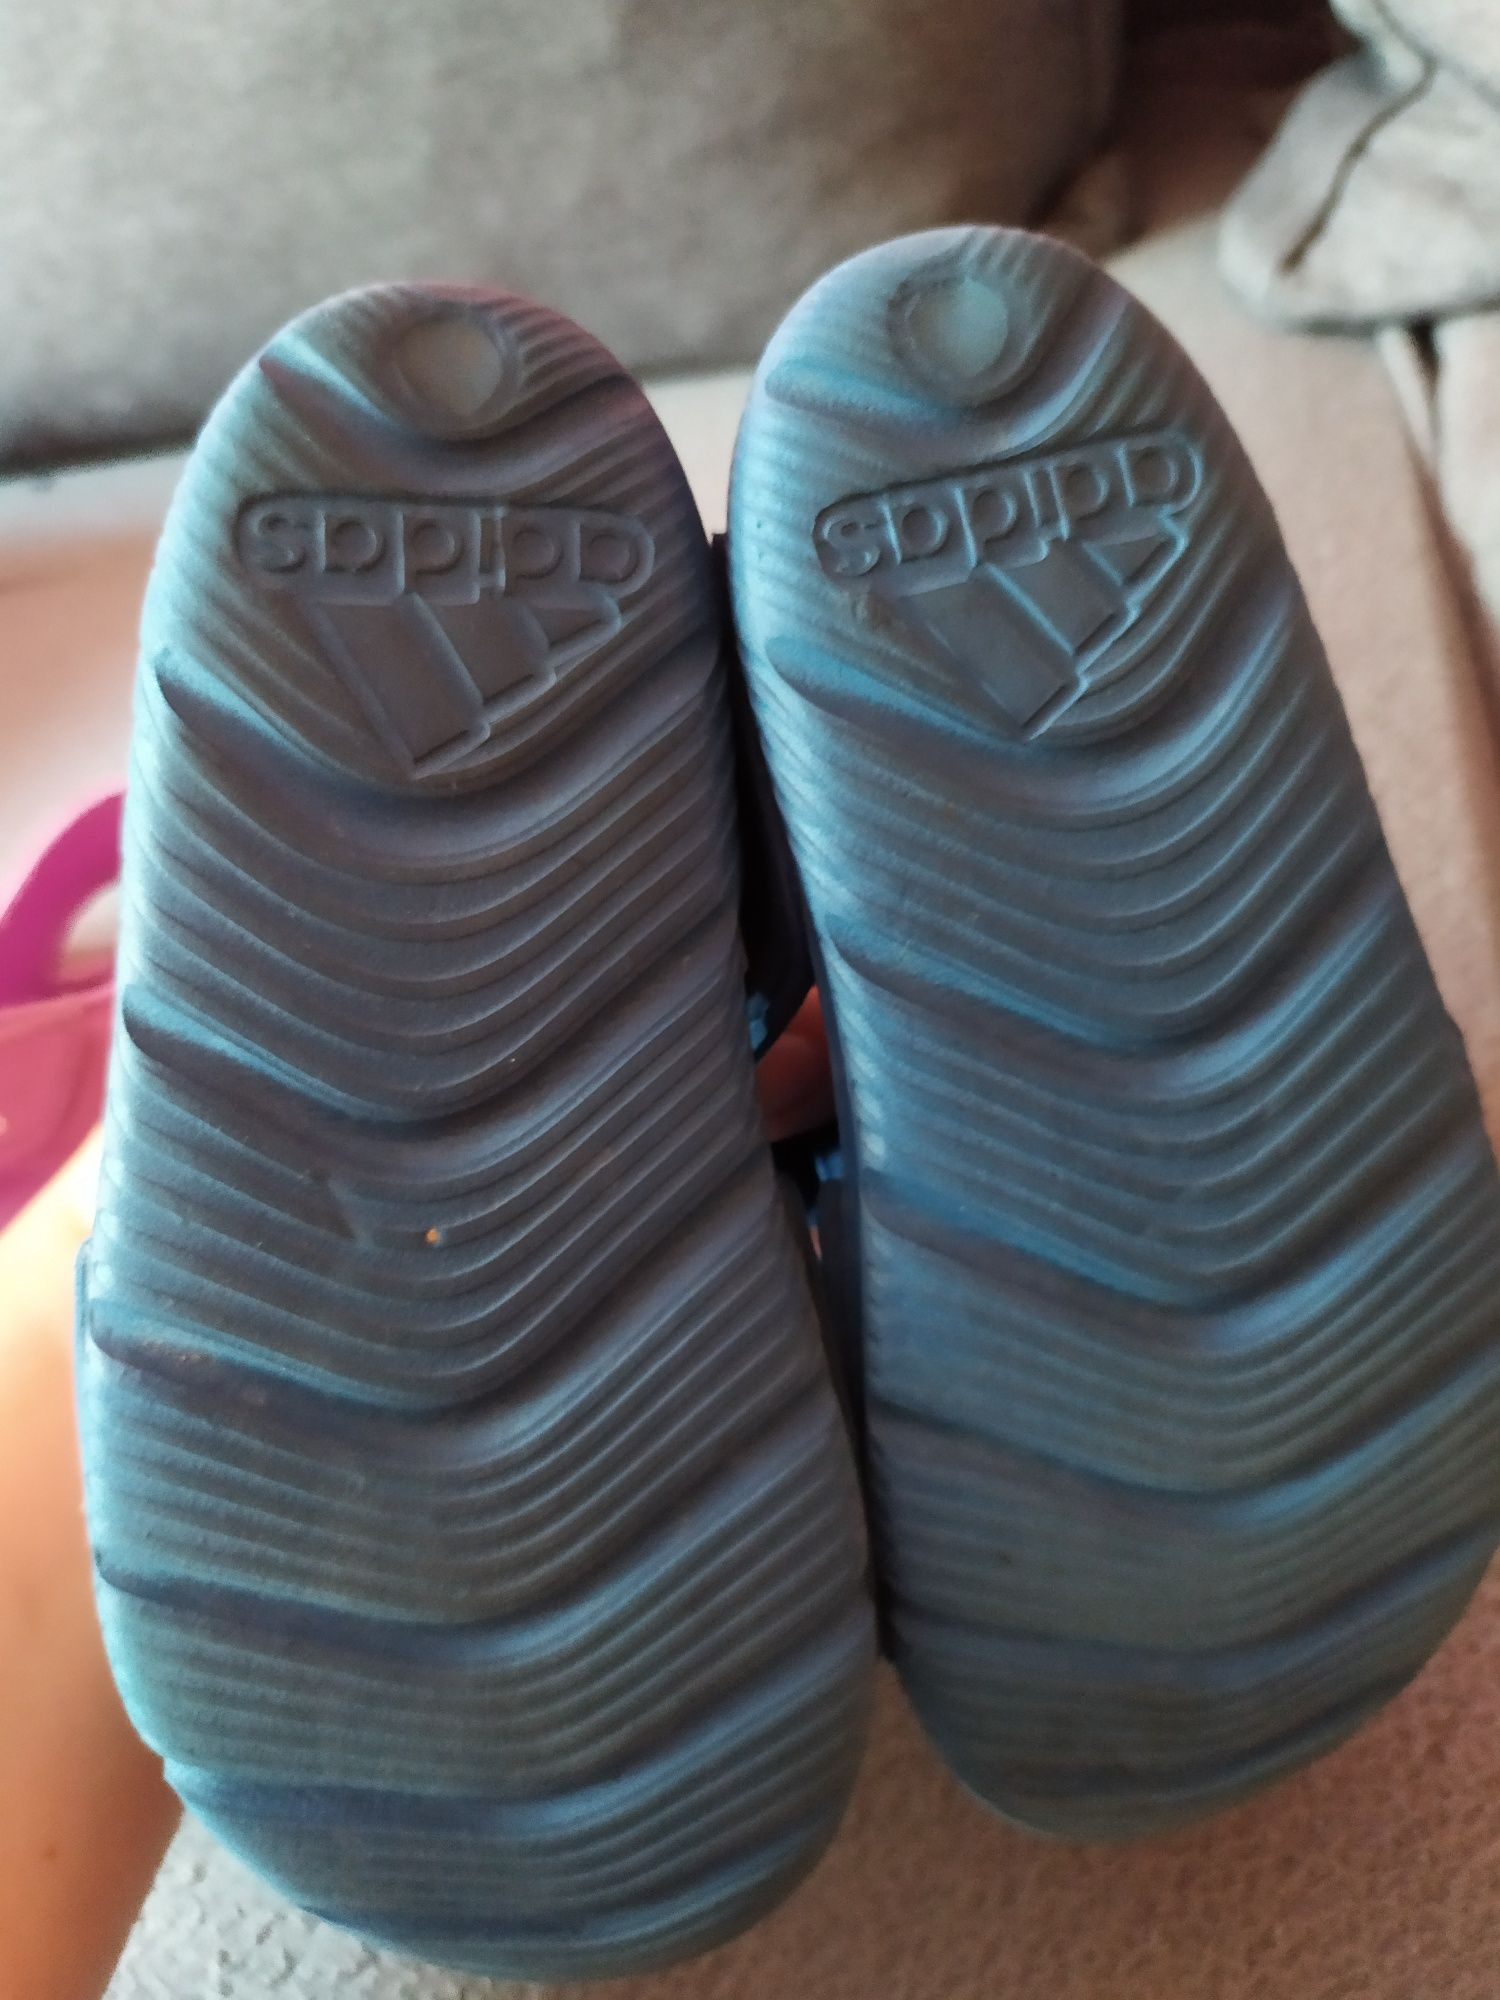 Sandałki Adidas chłopięce